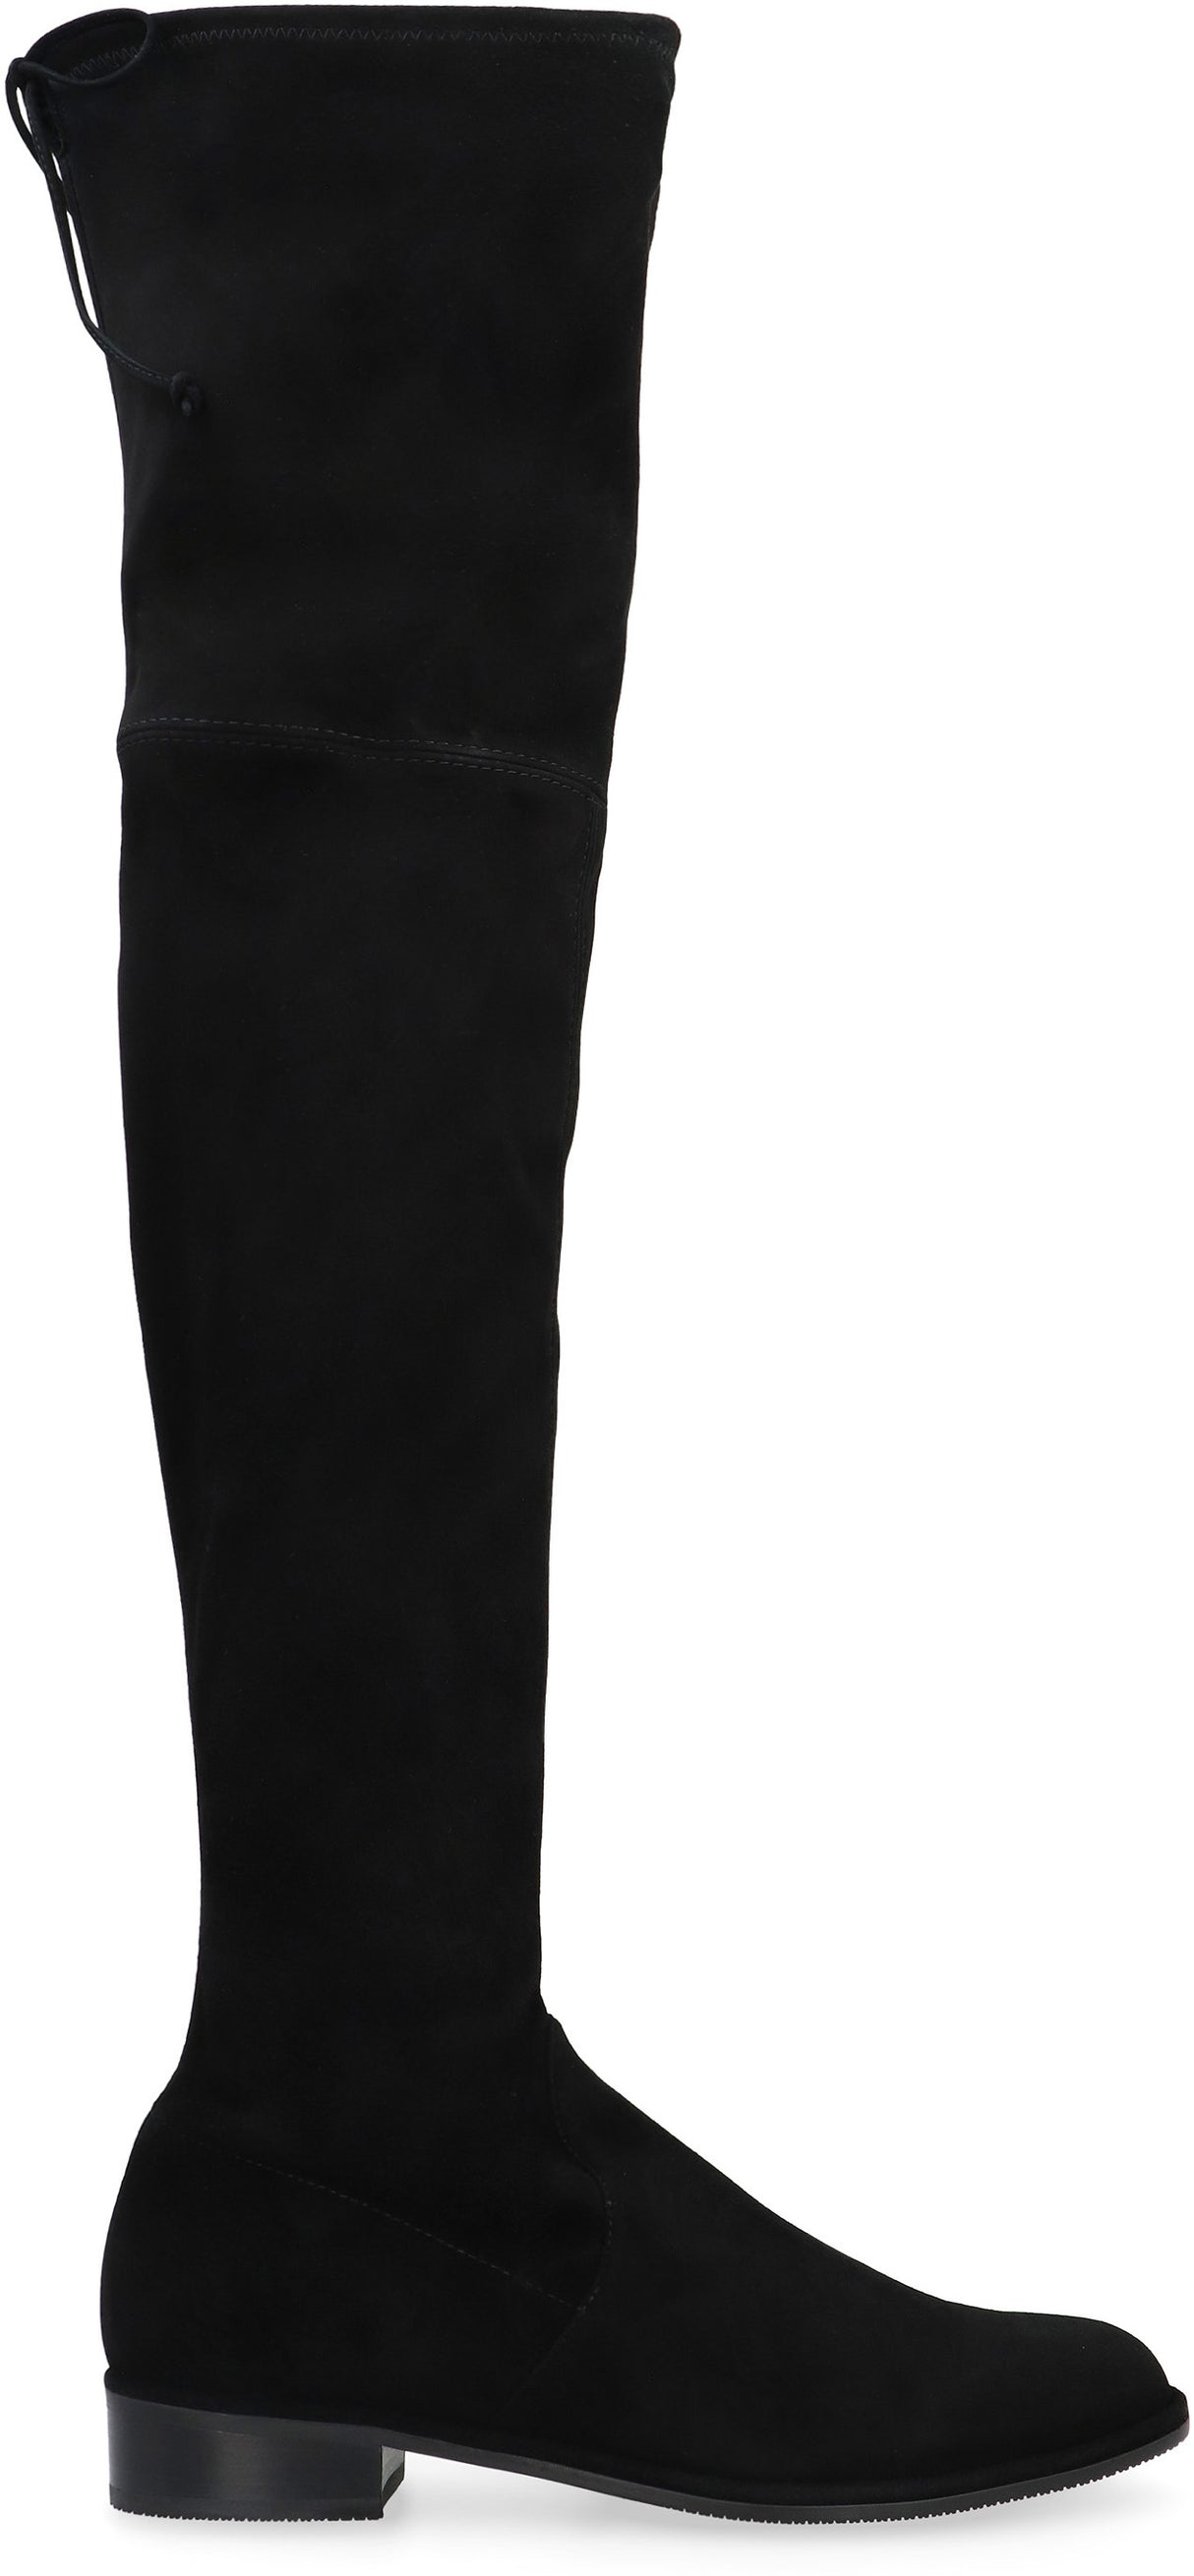 STUART WEITZMAN Stylish Black Over-the-Knee Boots for Women